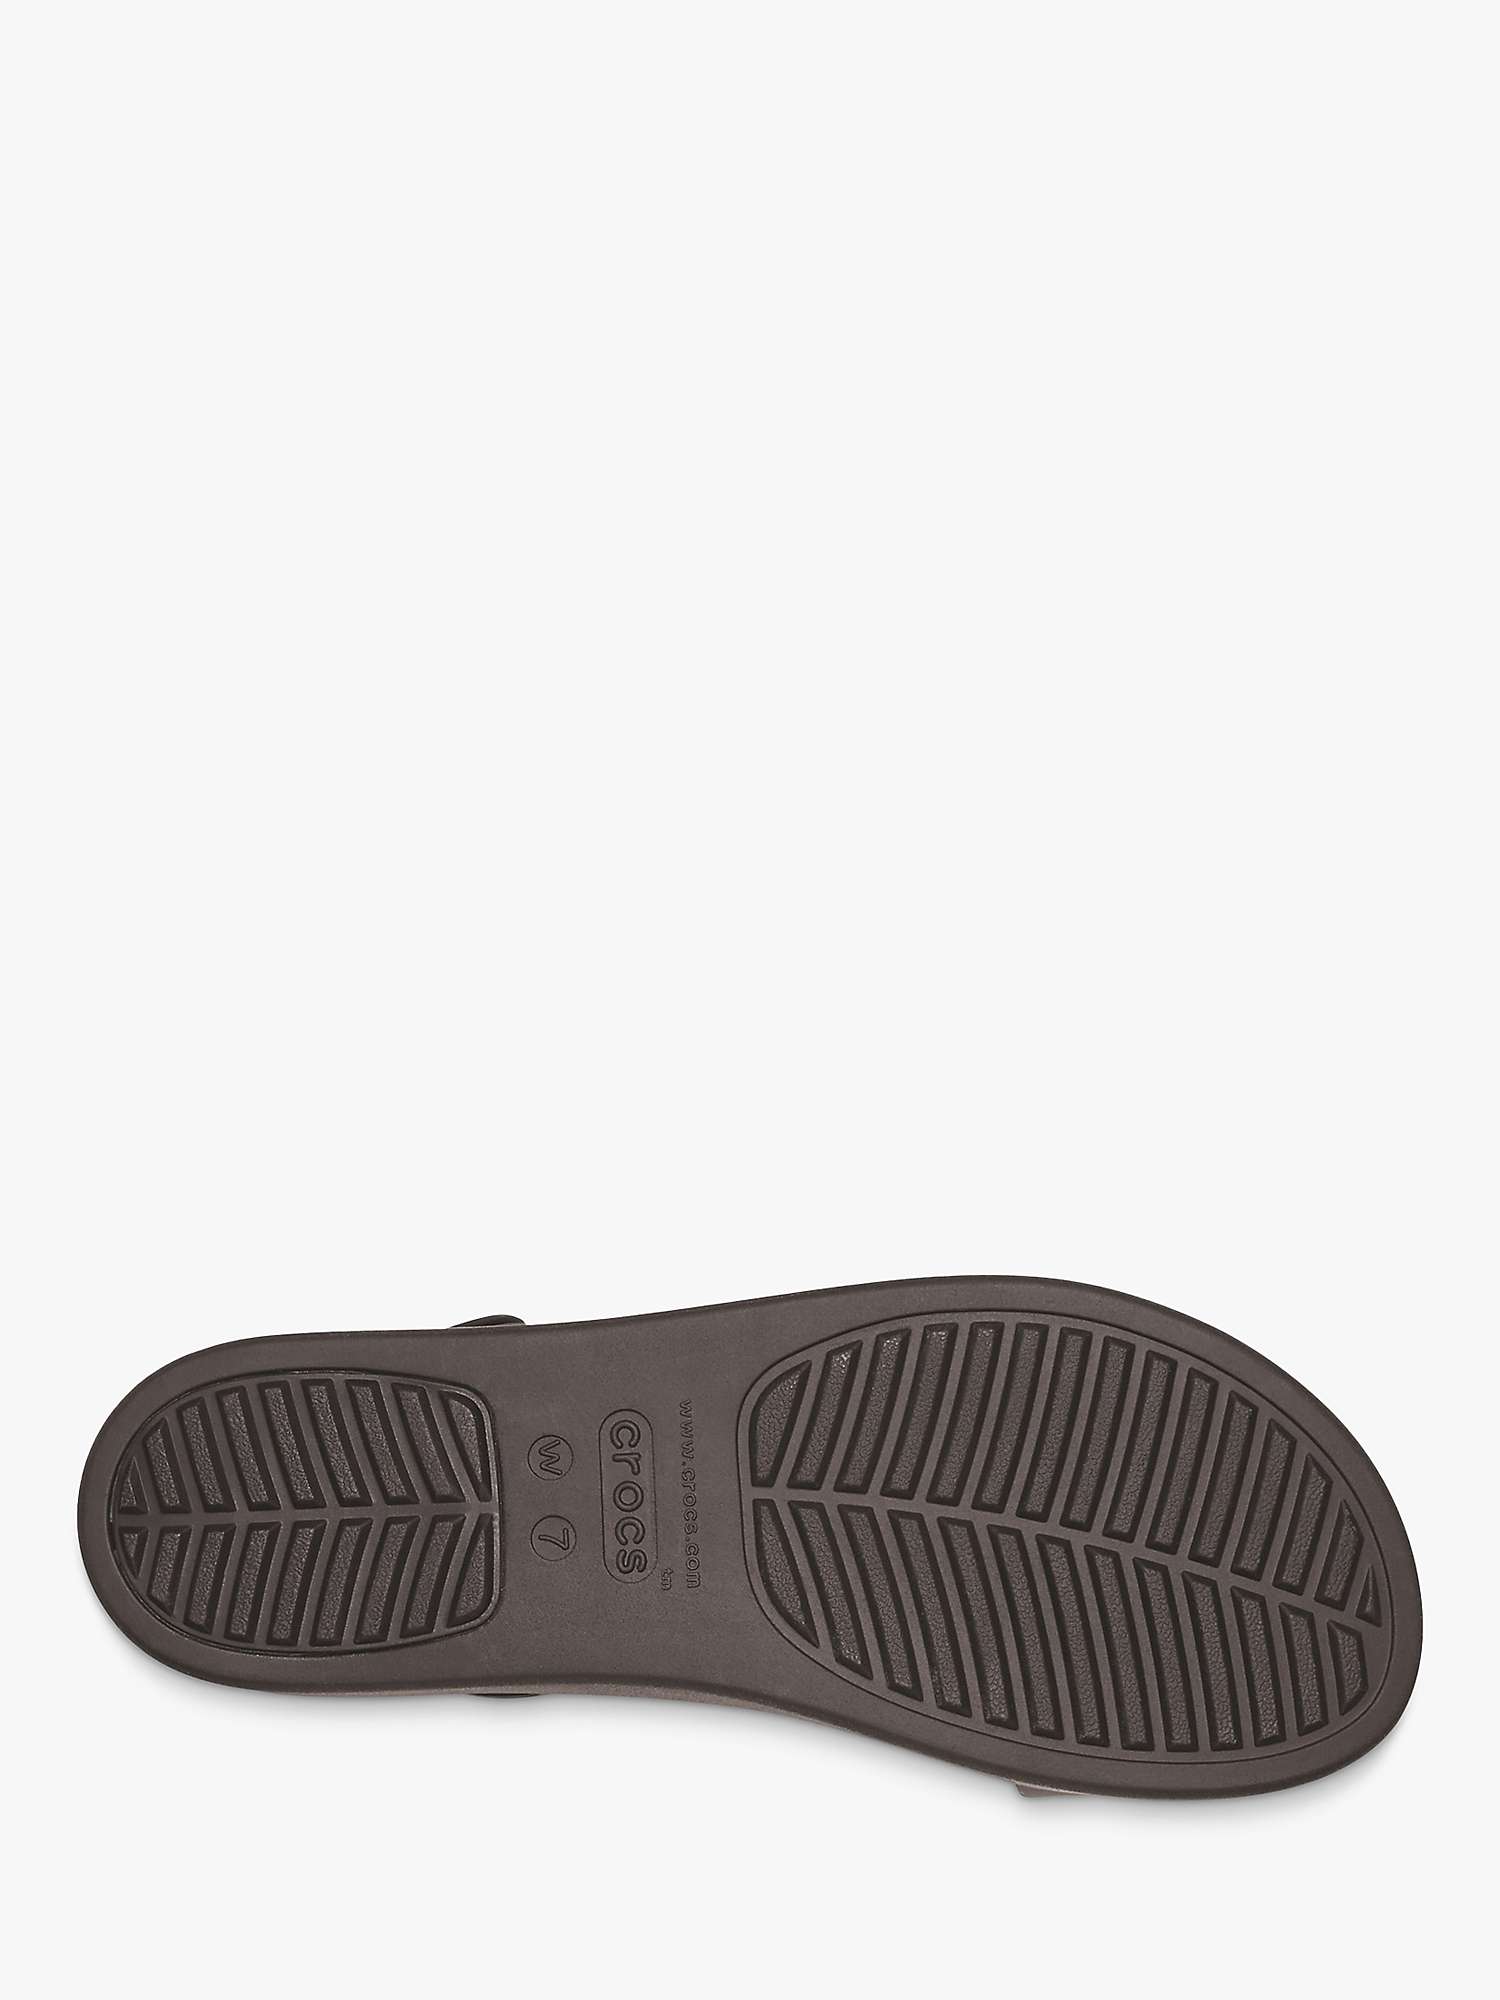 Buy Crocs Brooklyn Low Wedge Platform Sandals, Black Online at johnlewis.com